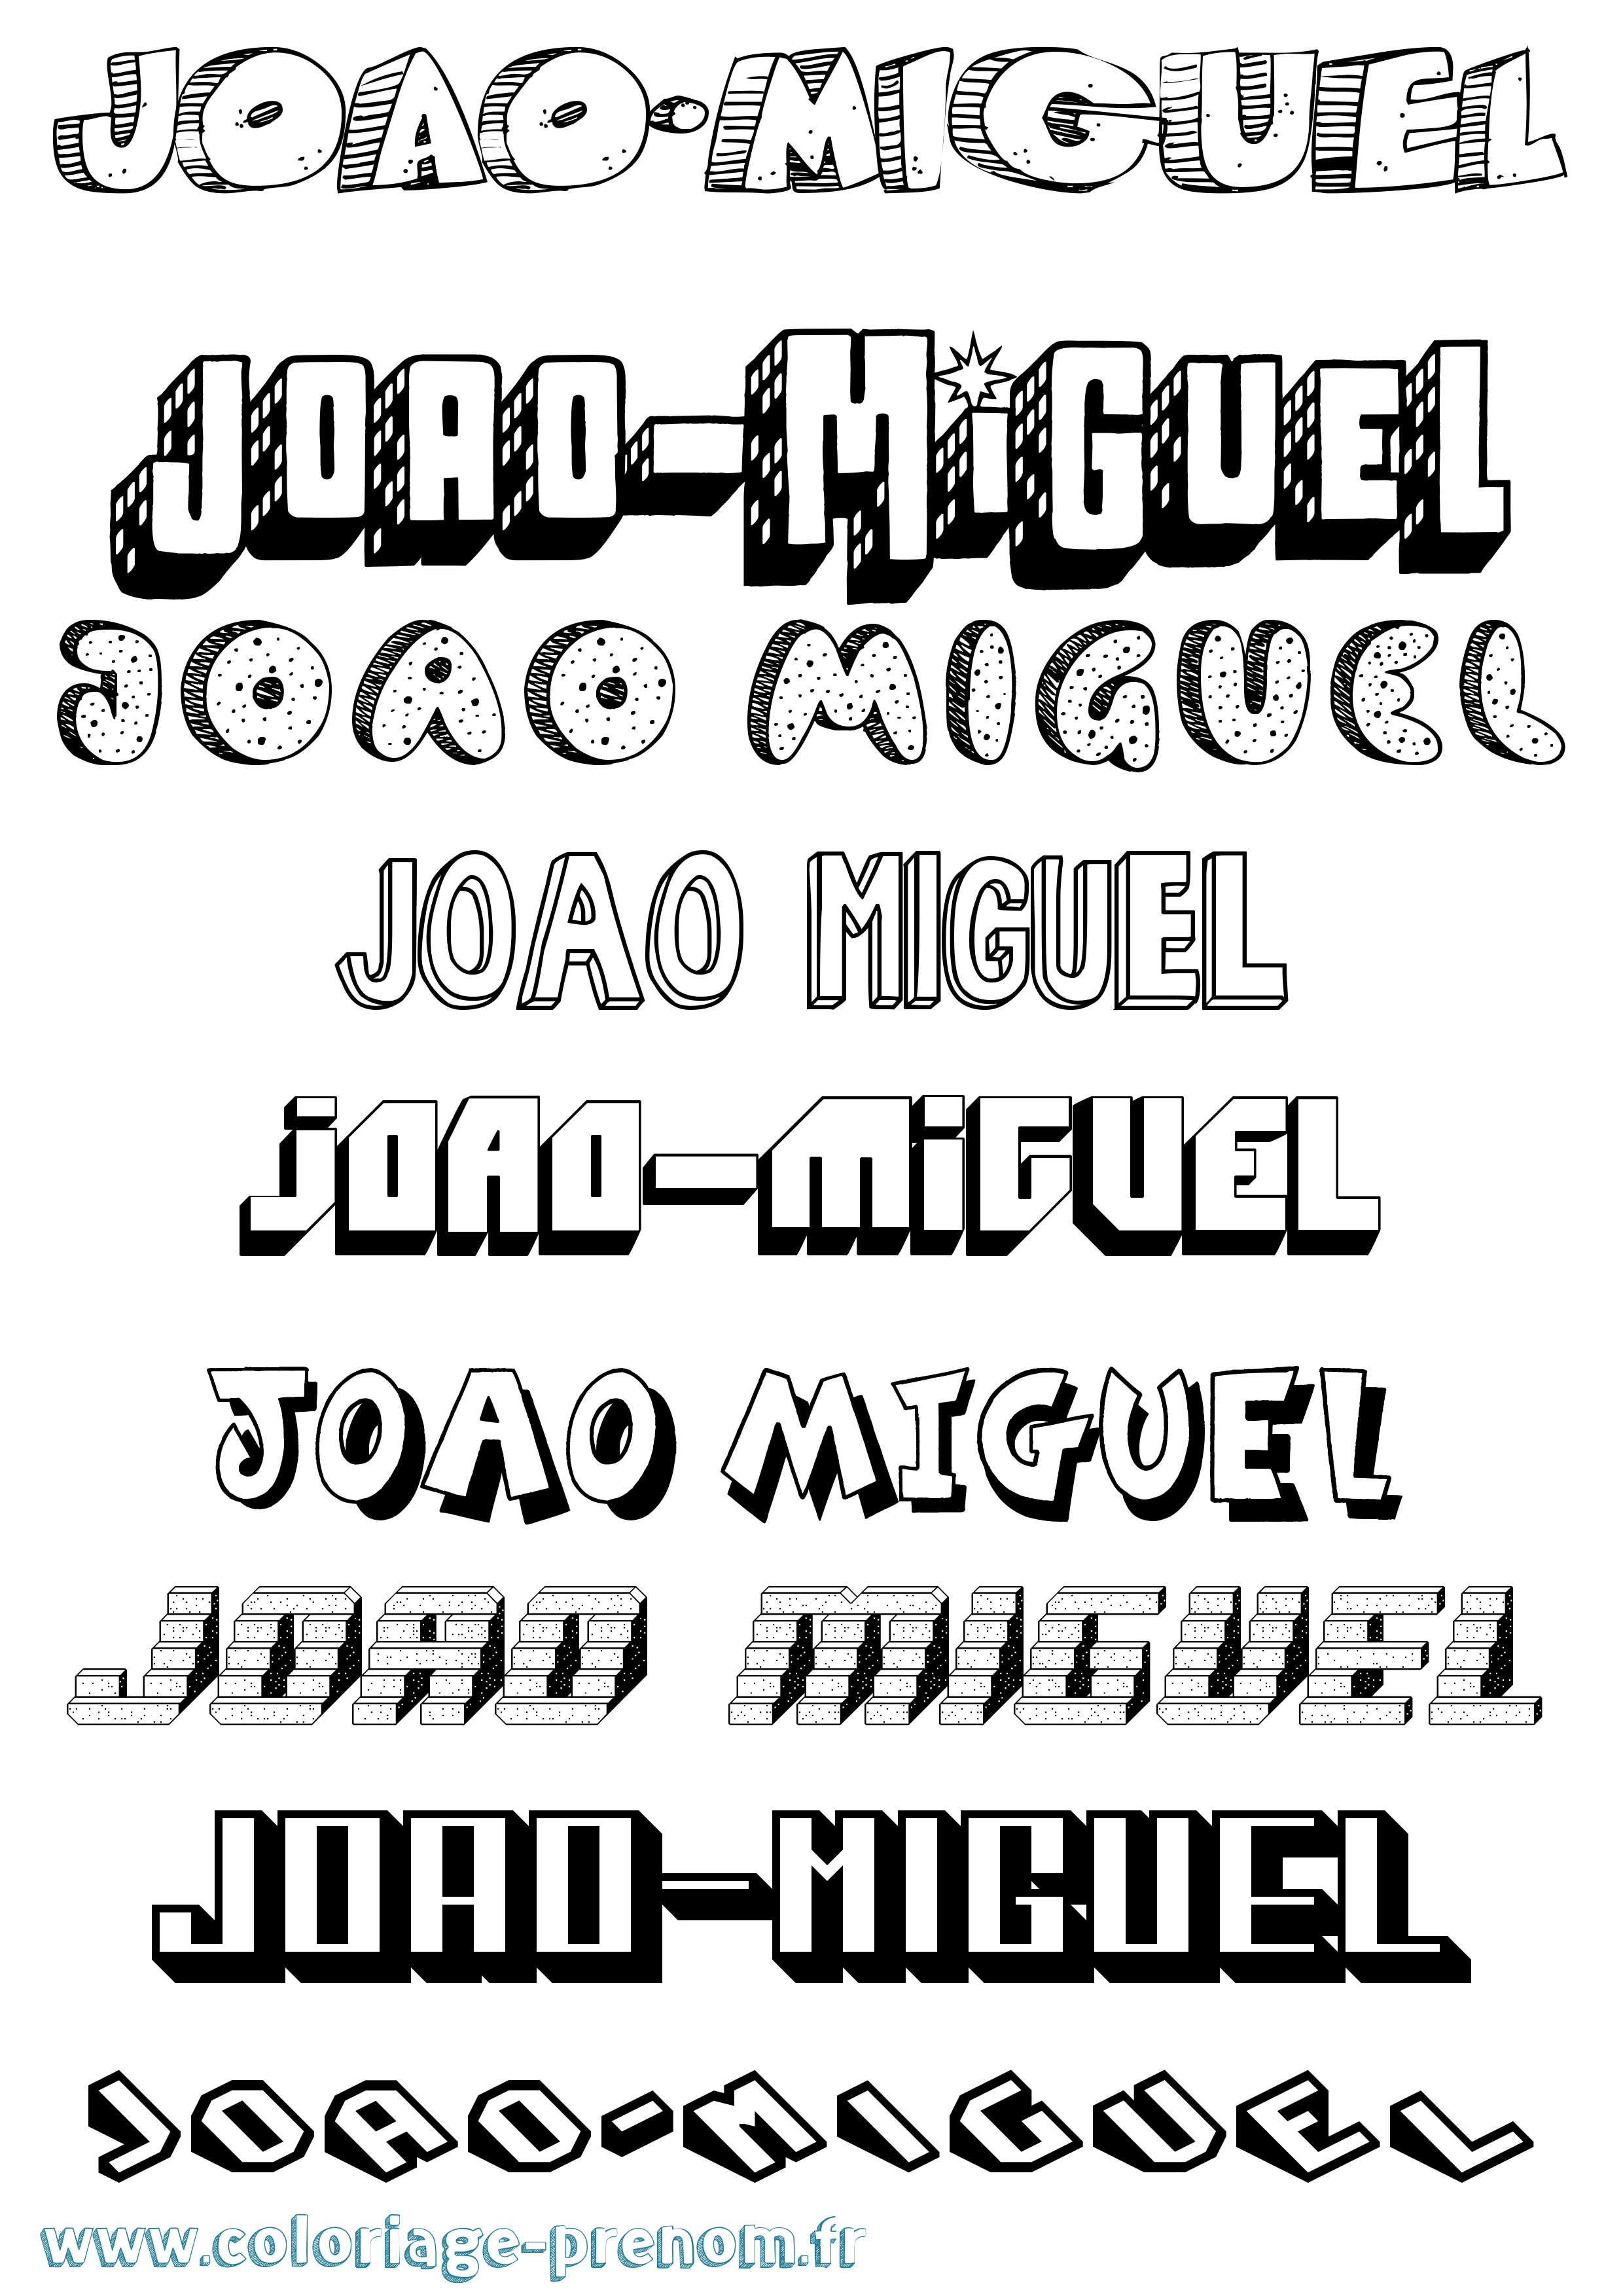 Coloriage prénom Joao-Miguel Effet 3D